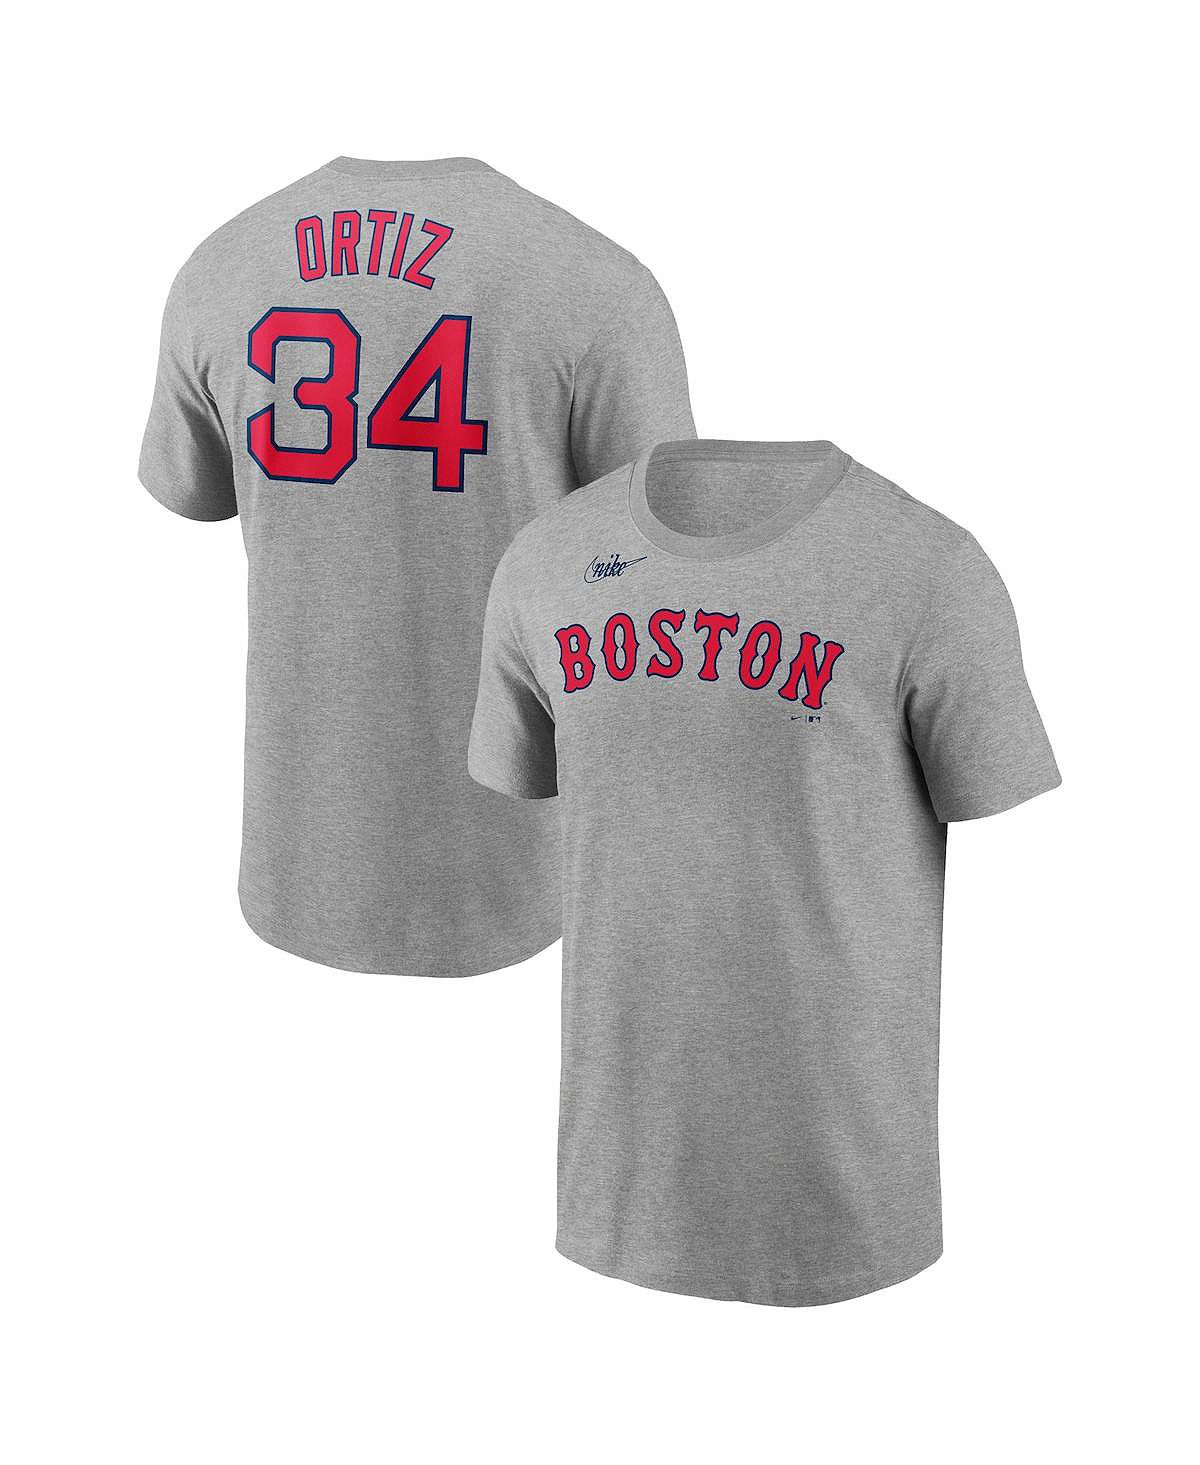 цена Мужская футболка David Ortiz Heather Grey Boston Red Sox с именем и номером Nike